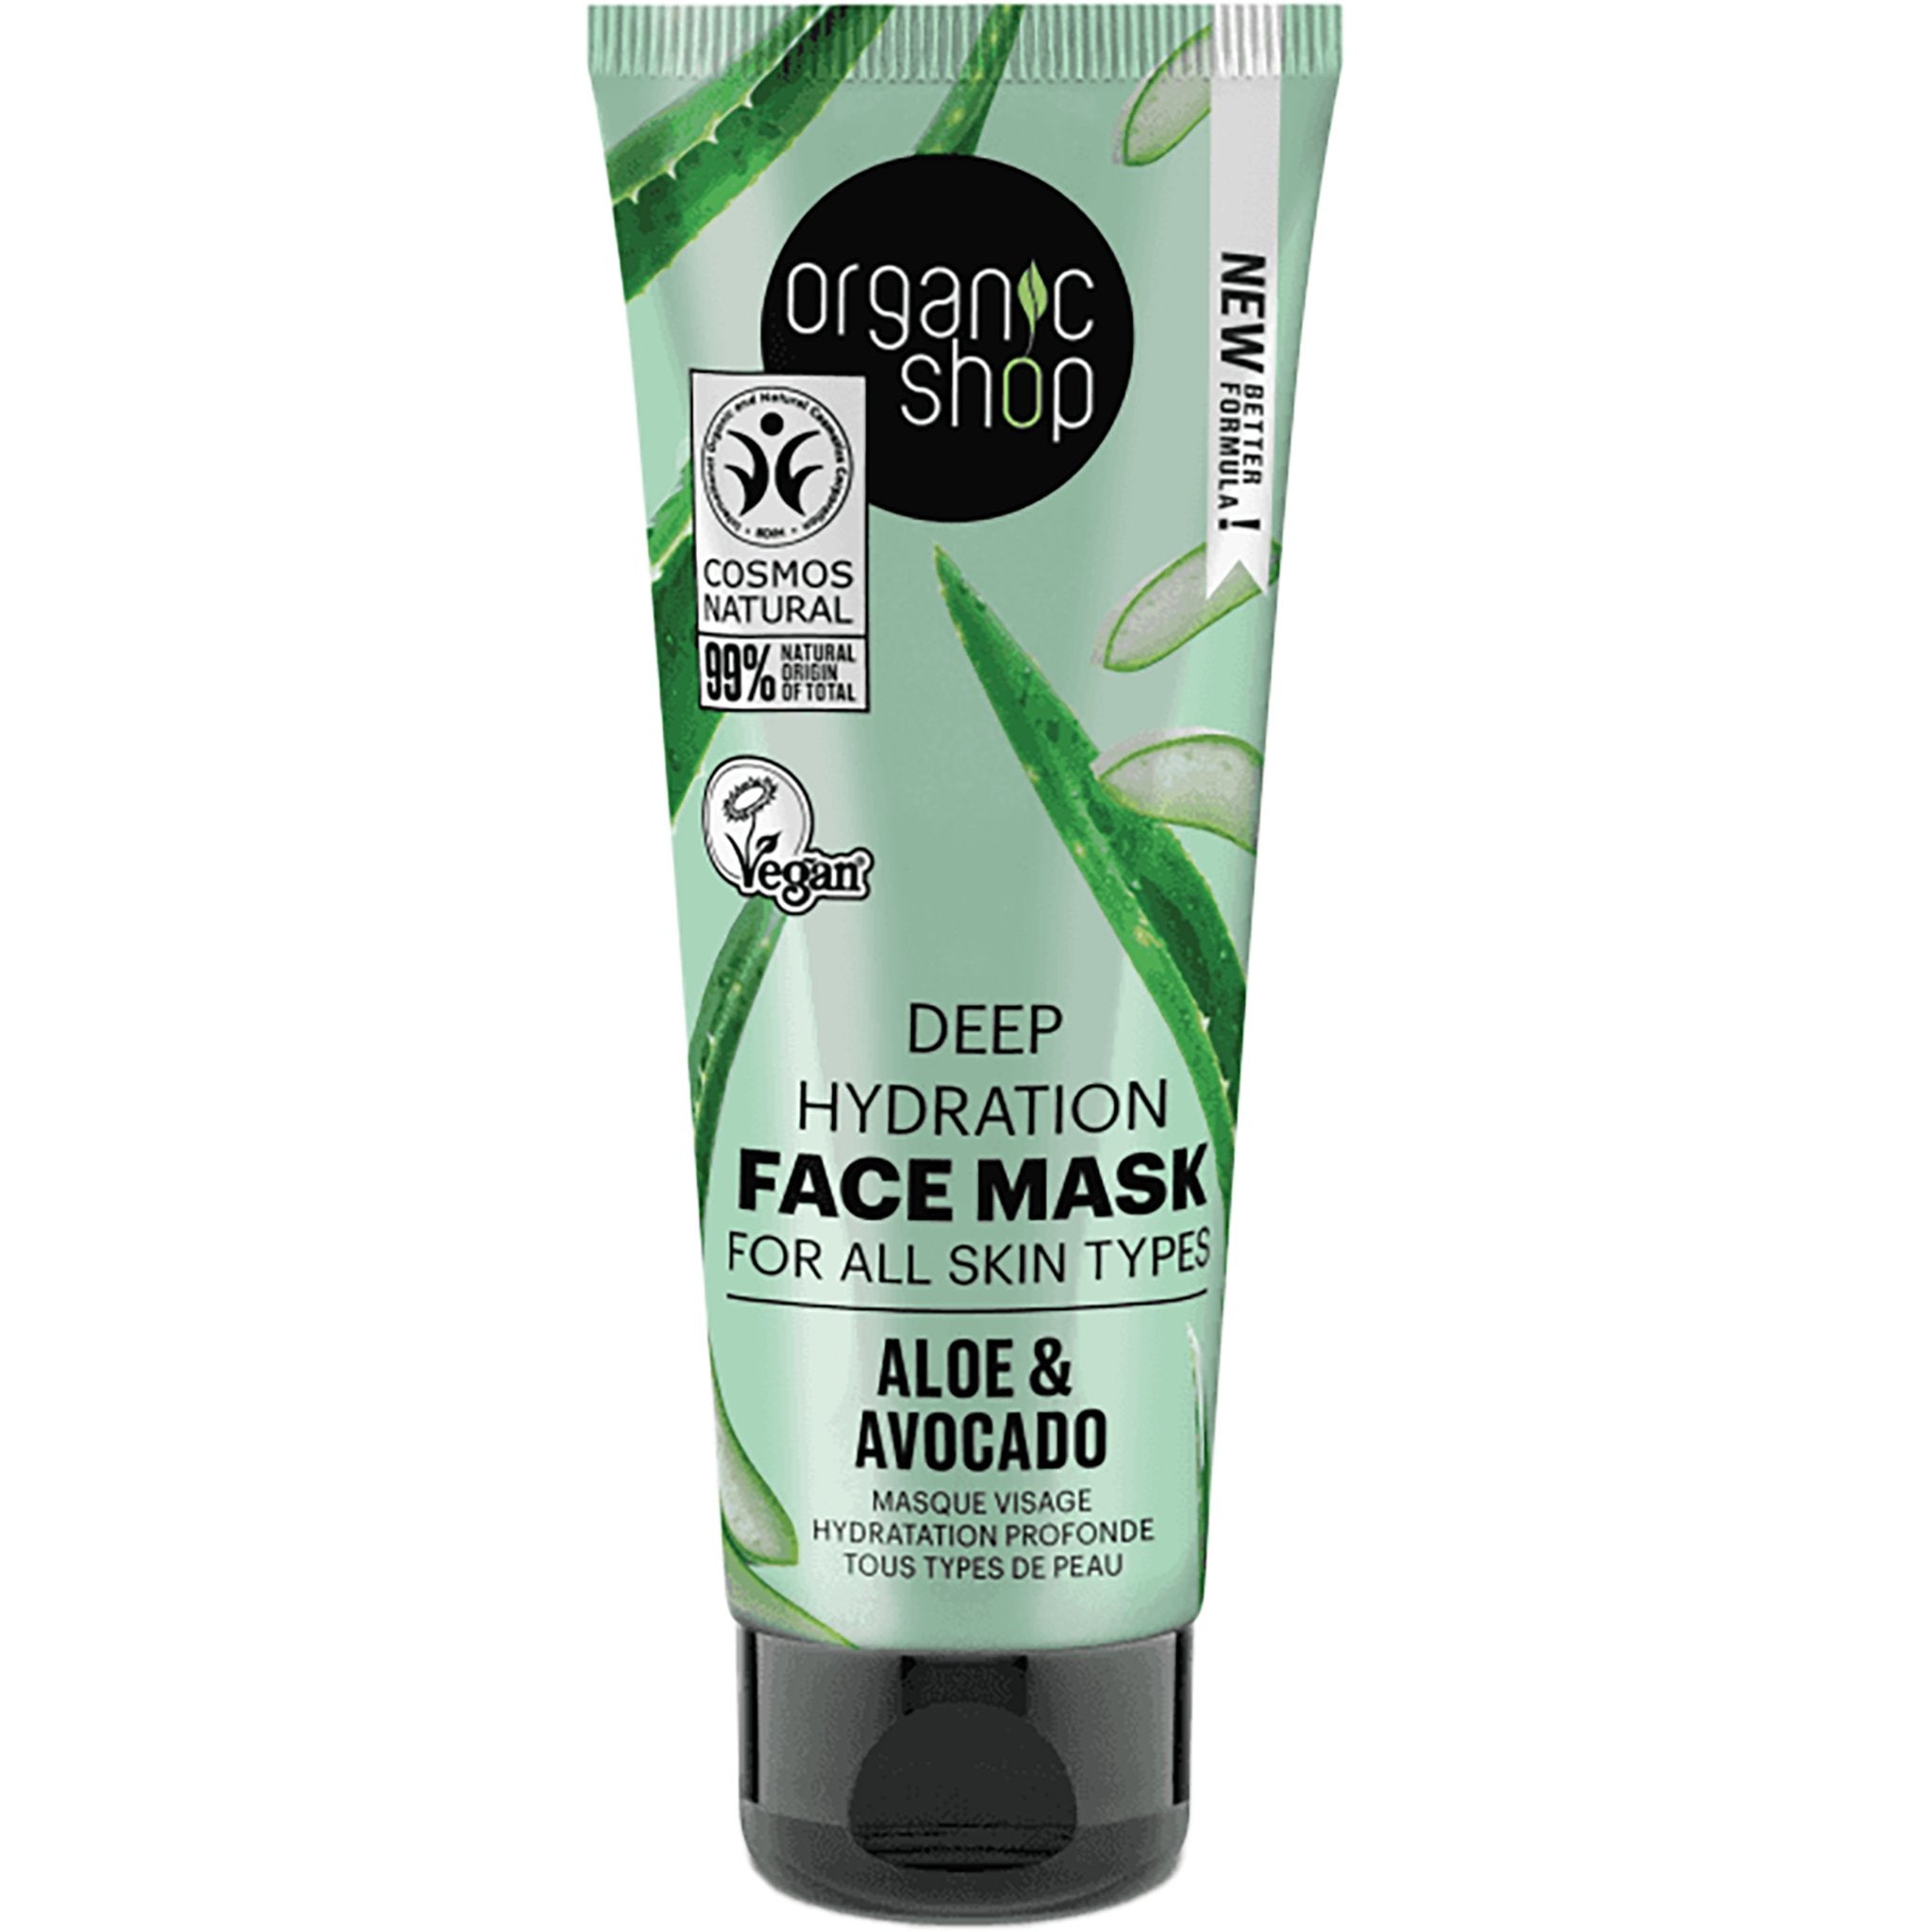 NEW Aloe & Avocado Deep hydration Face Mask - mypure.co.uk